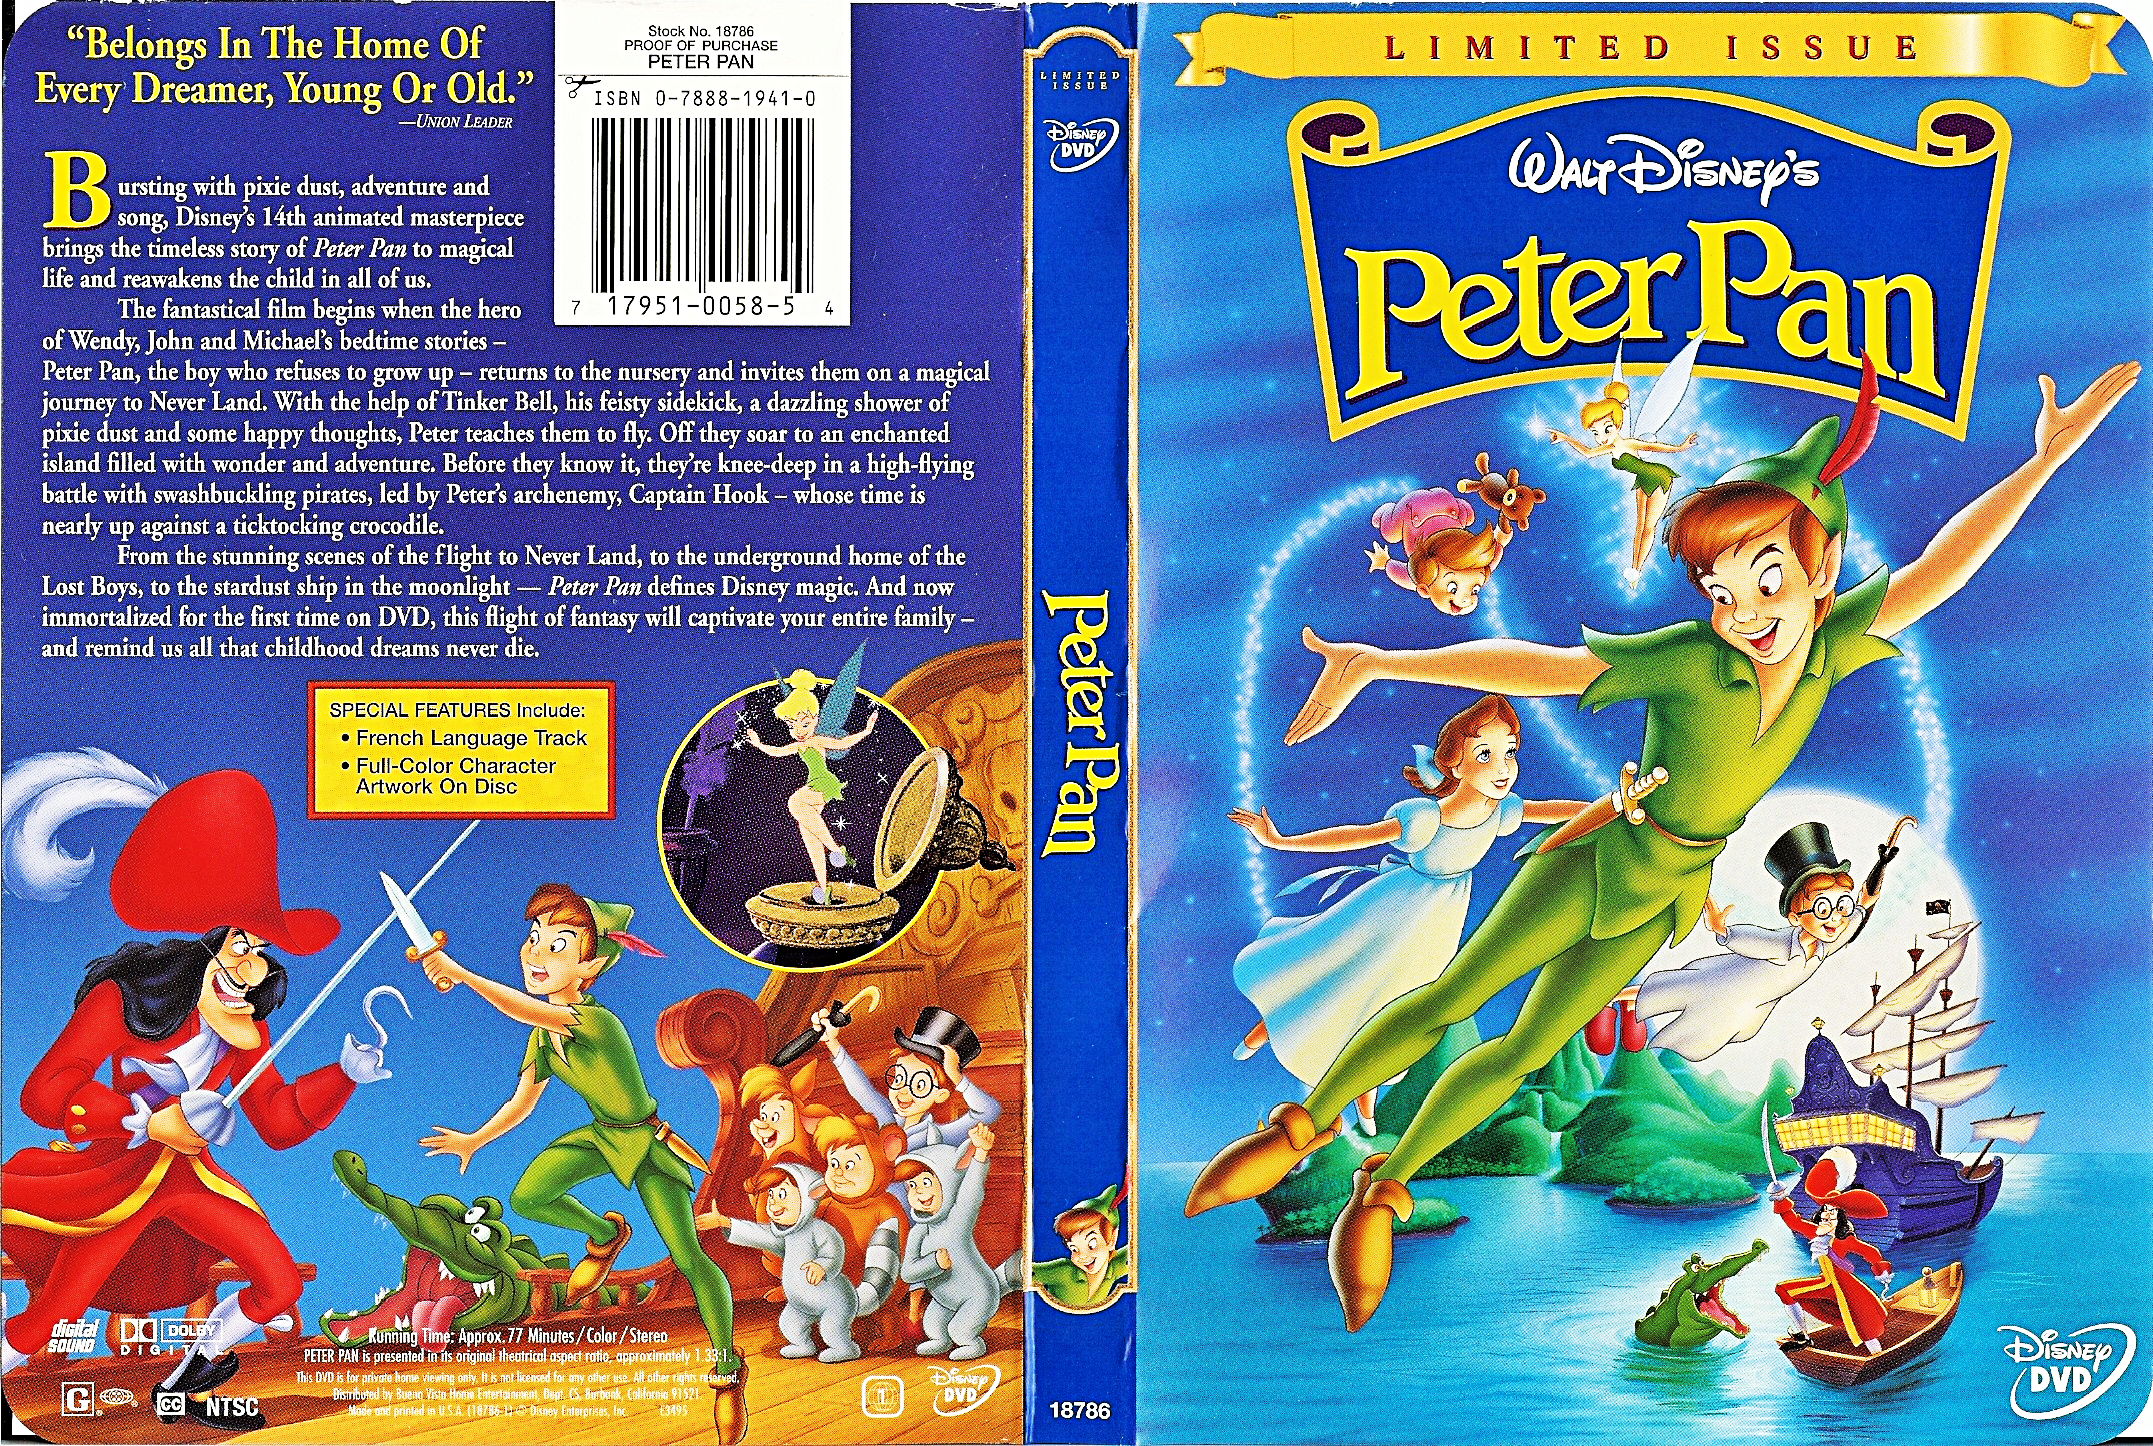 Дисней диск. Питер Пэн двд. DVD Уолт Дисней Питер Пэн. Walt Disney DVD Covers. Питер Пэн Walt Disney DVD.